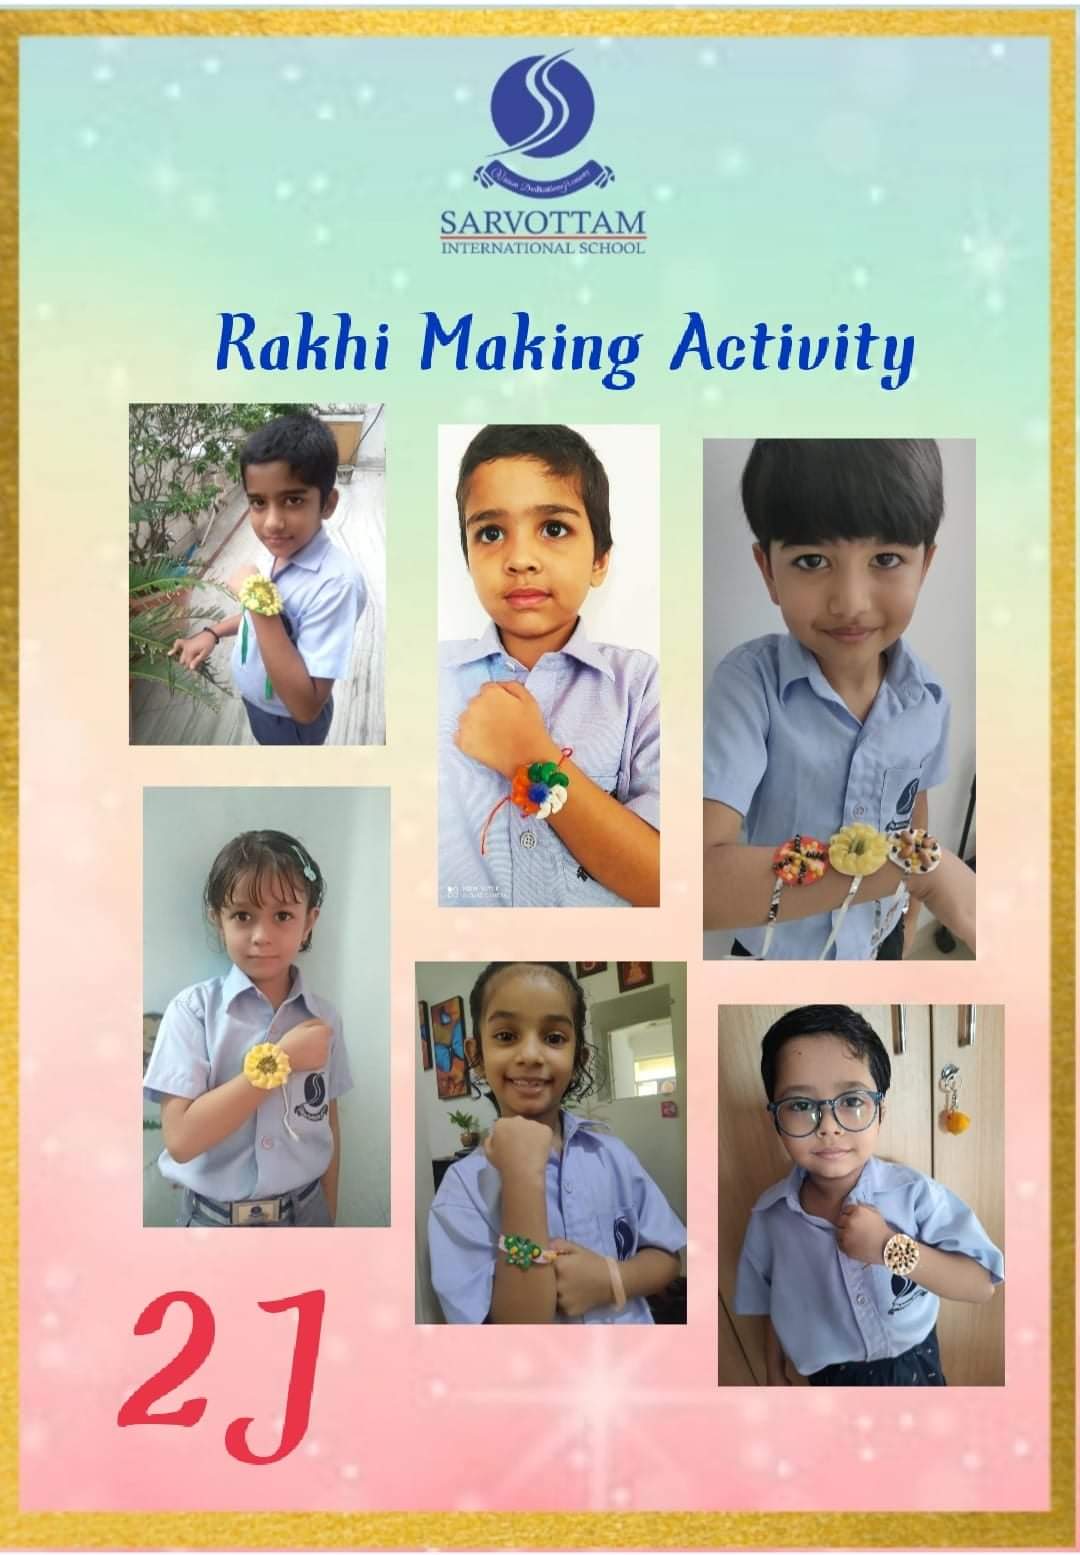 Rakhi making activity